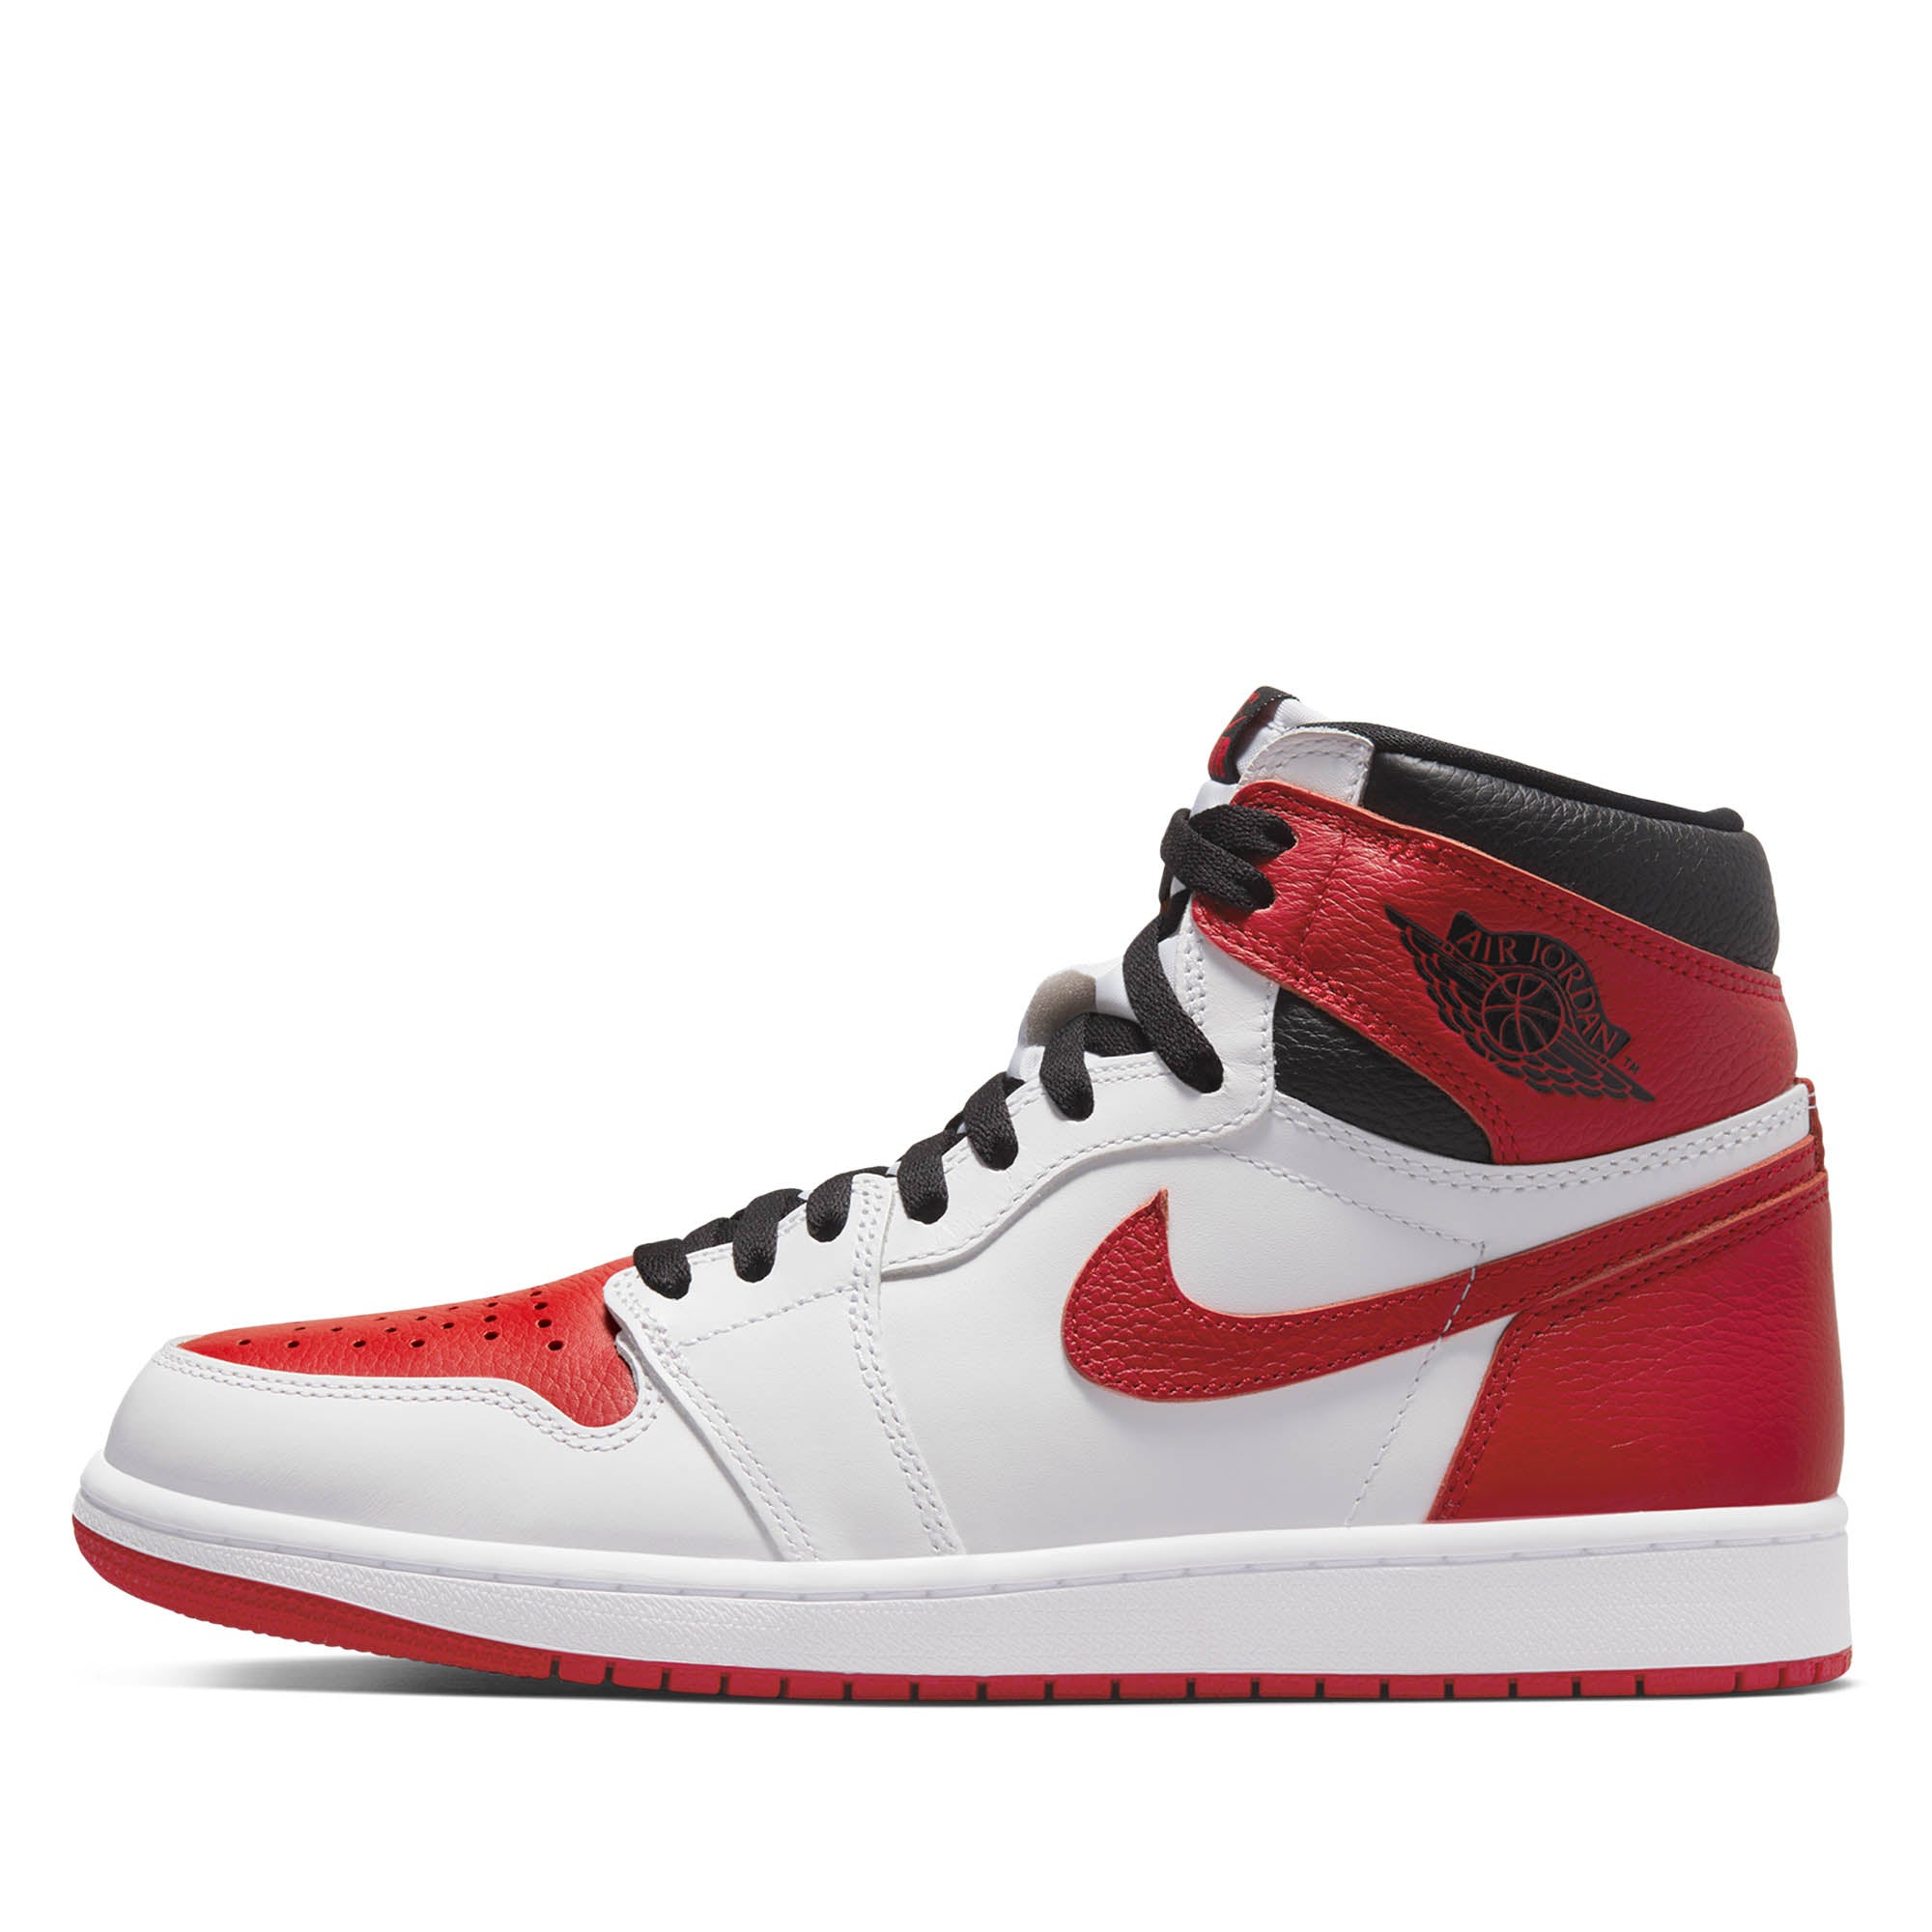 Nike - Air Jordan 1 Retro High OG - (555088-161)